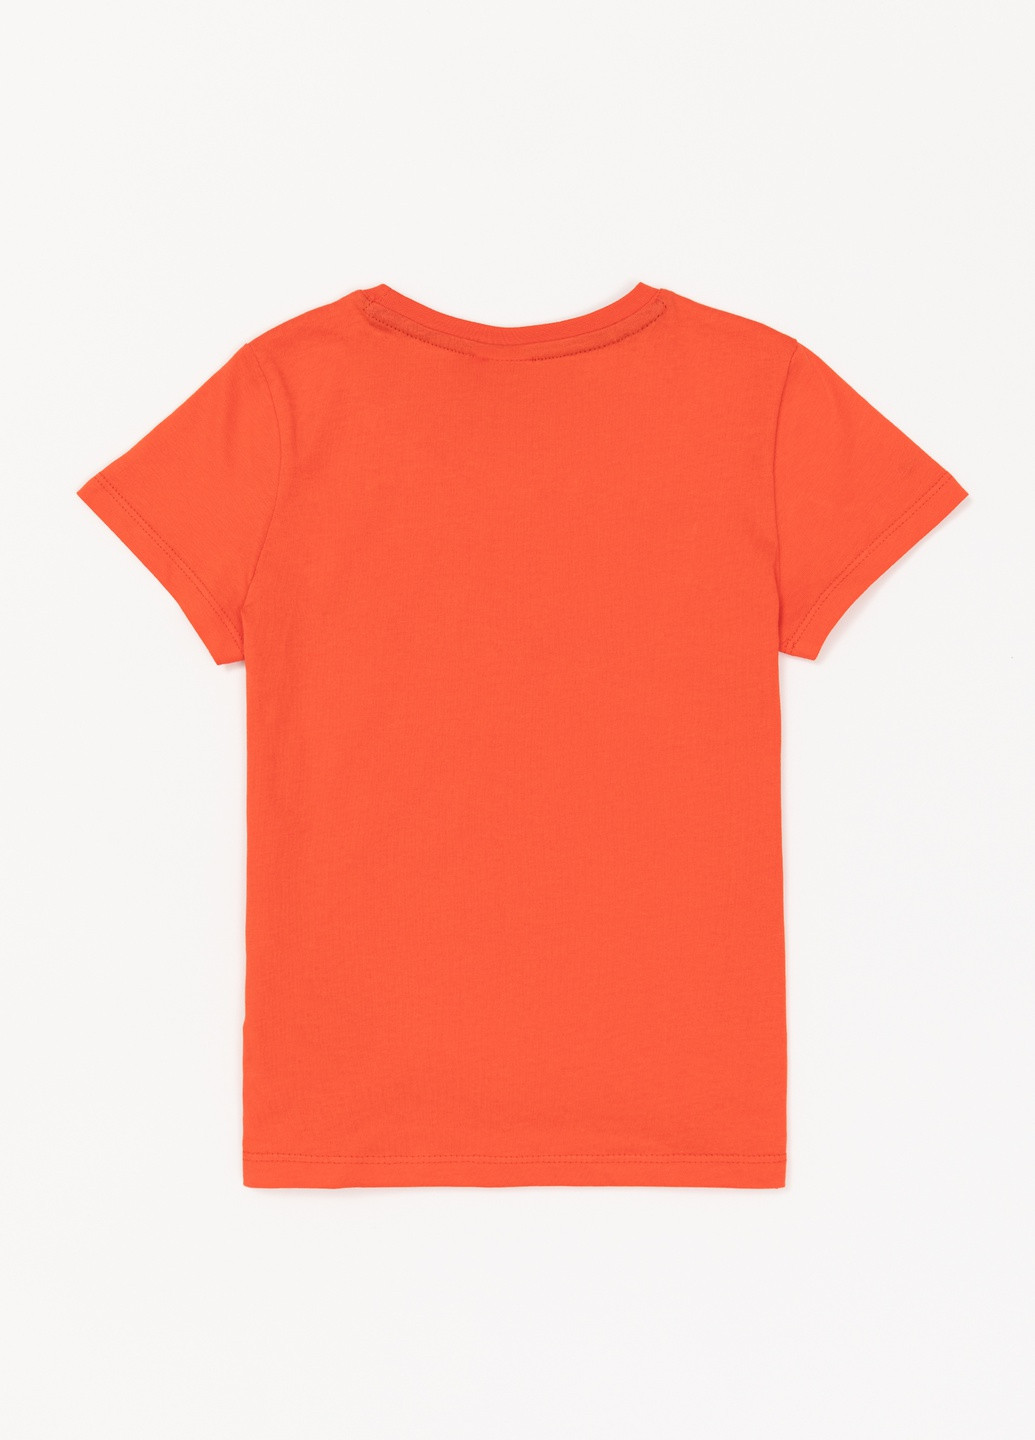 Оранжевая футболка u.s/ polo assn. на мальчика U.S. Polo Assn.